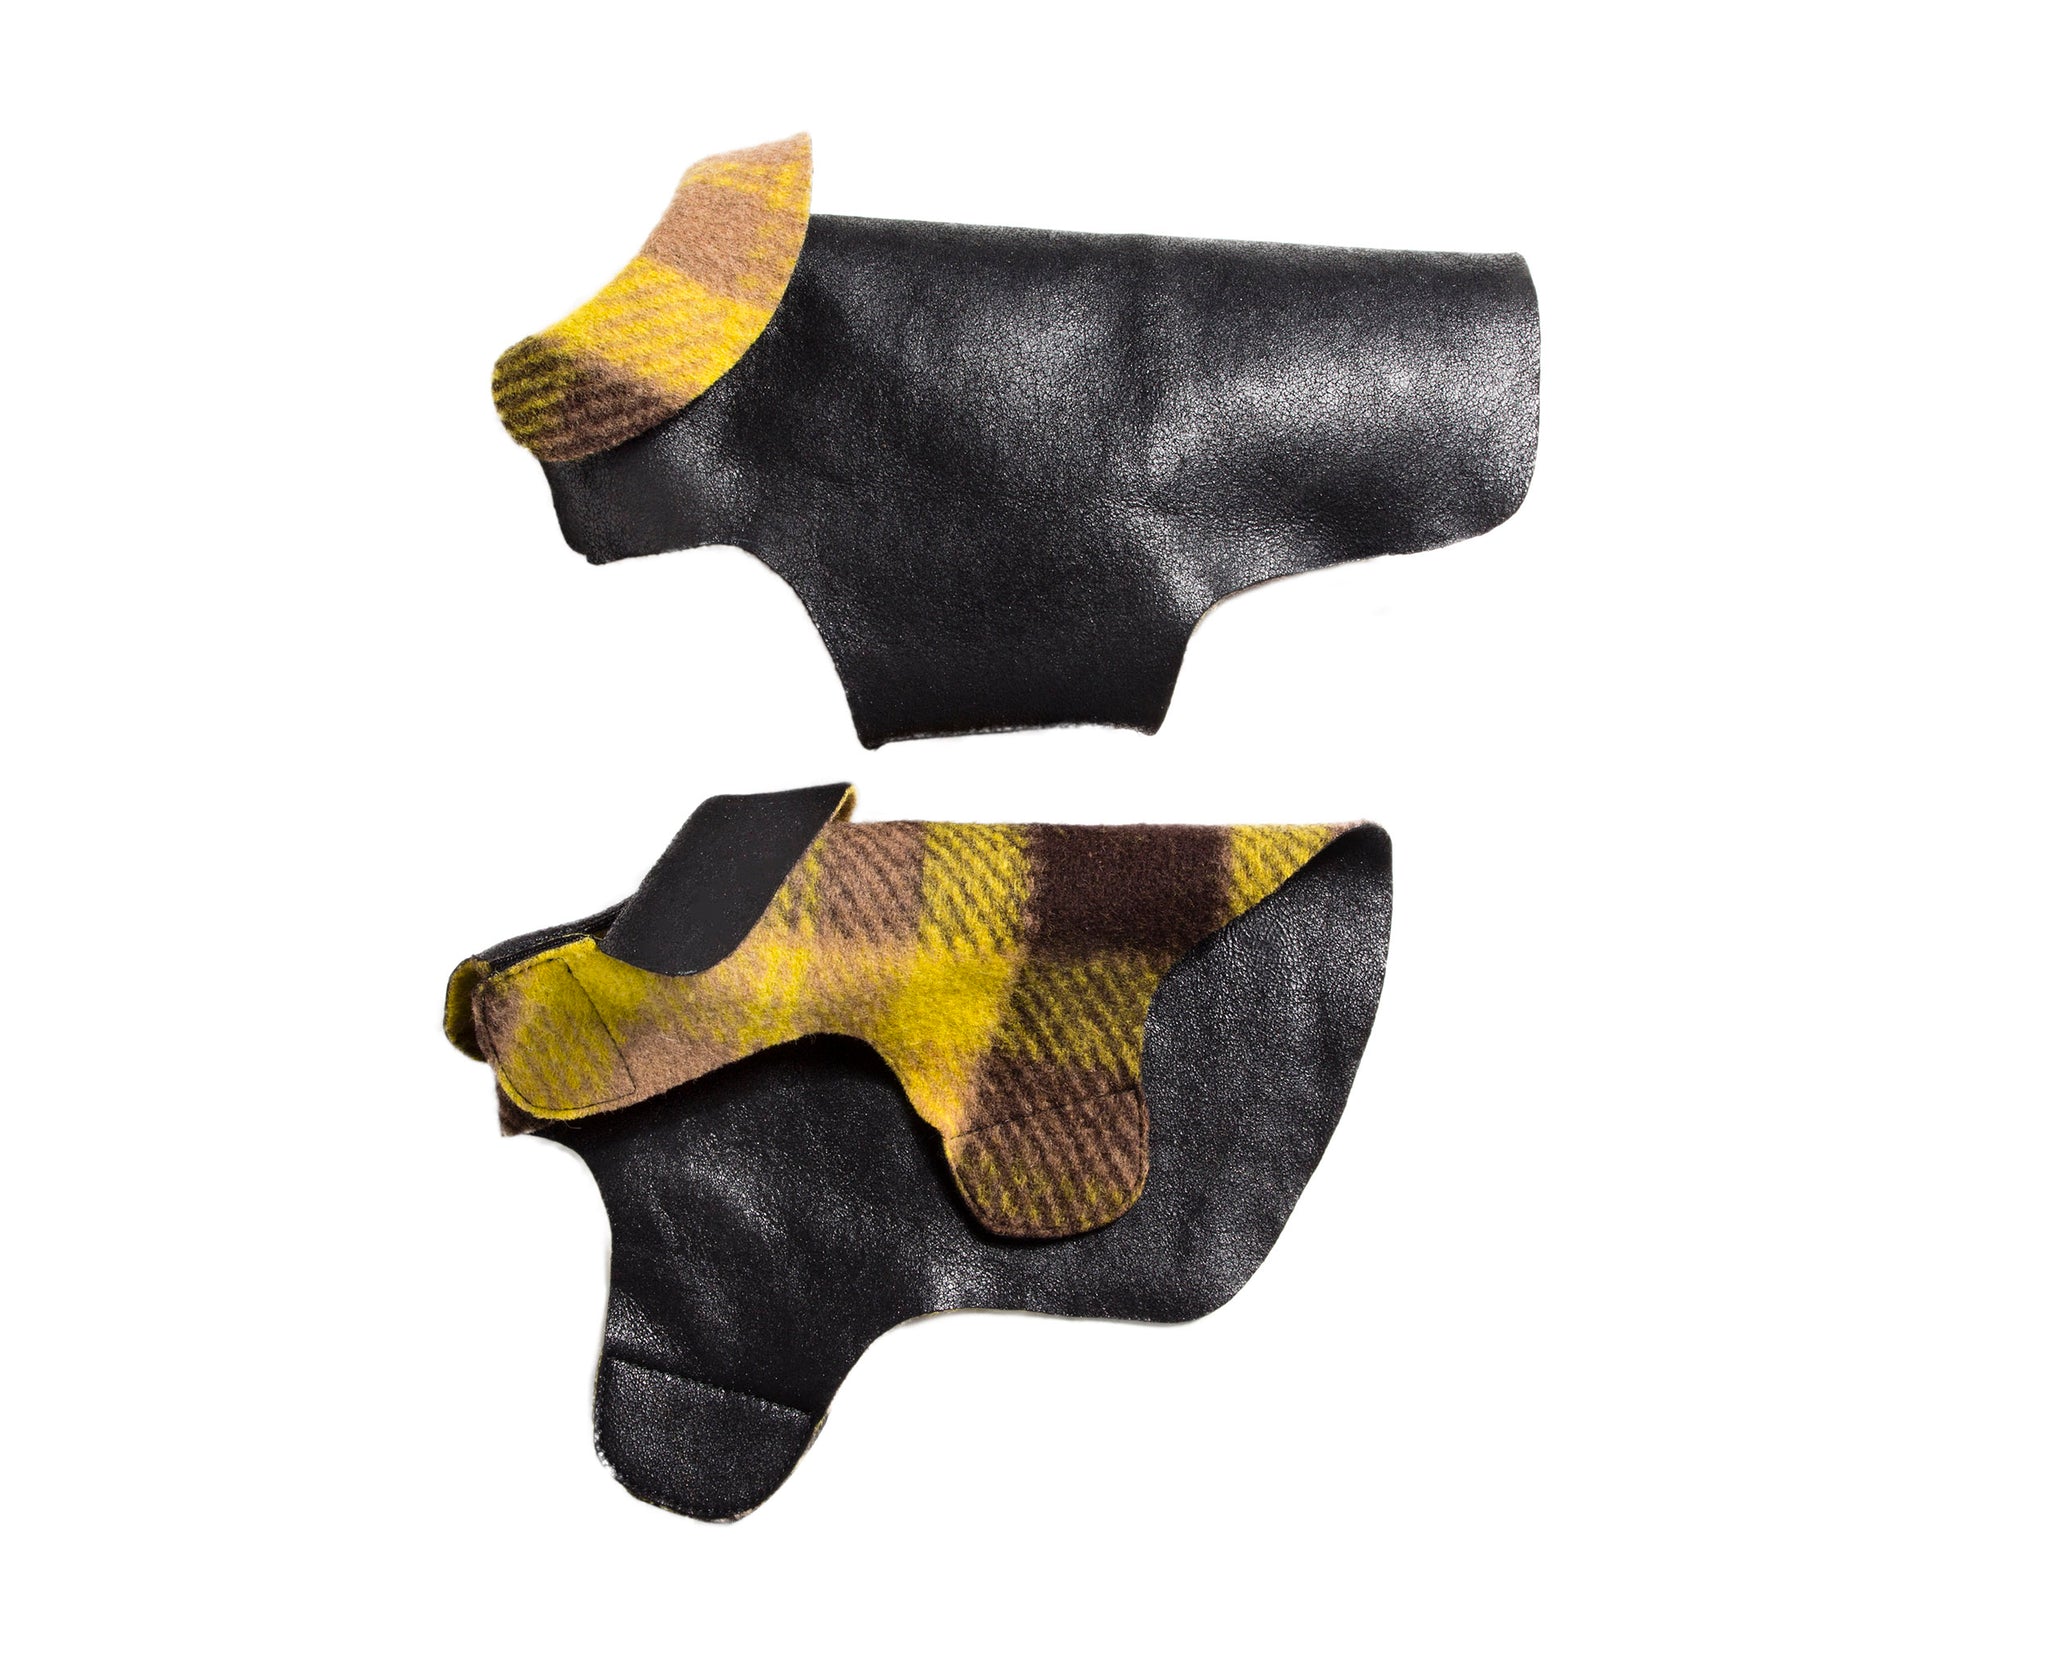 Hand-Cut - Black Leather w/Yellow Plaid Shearling